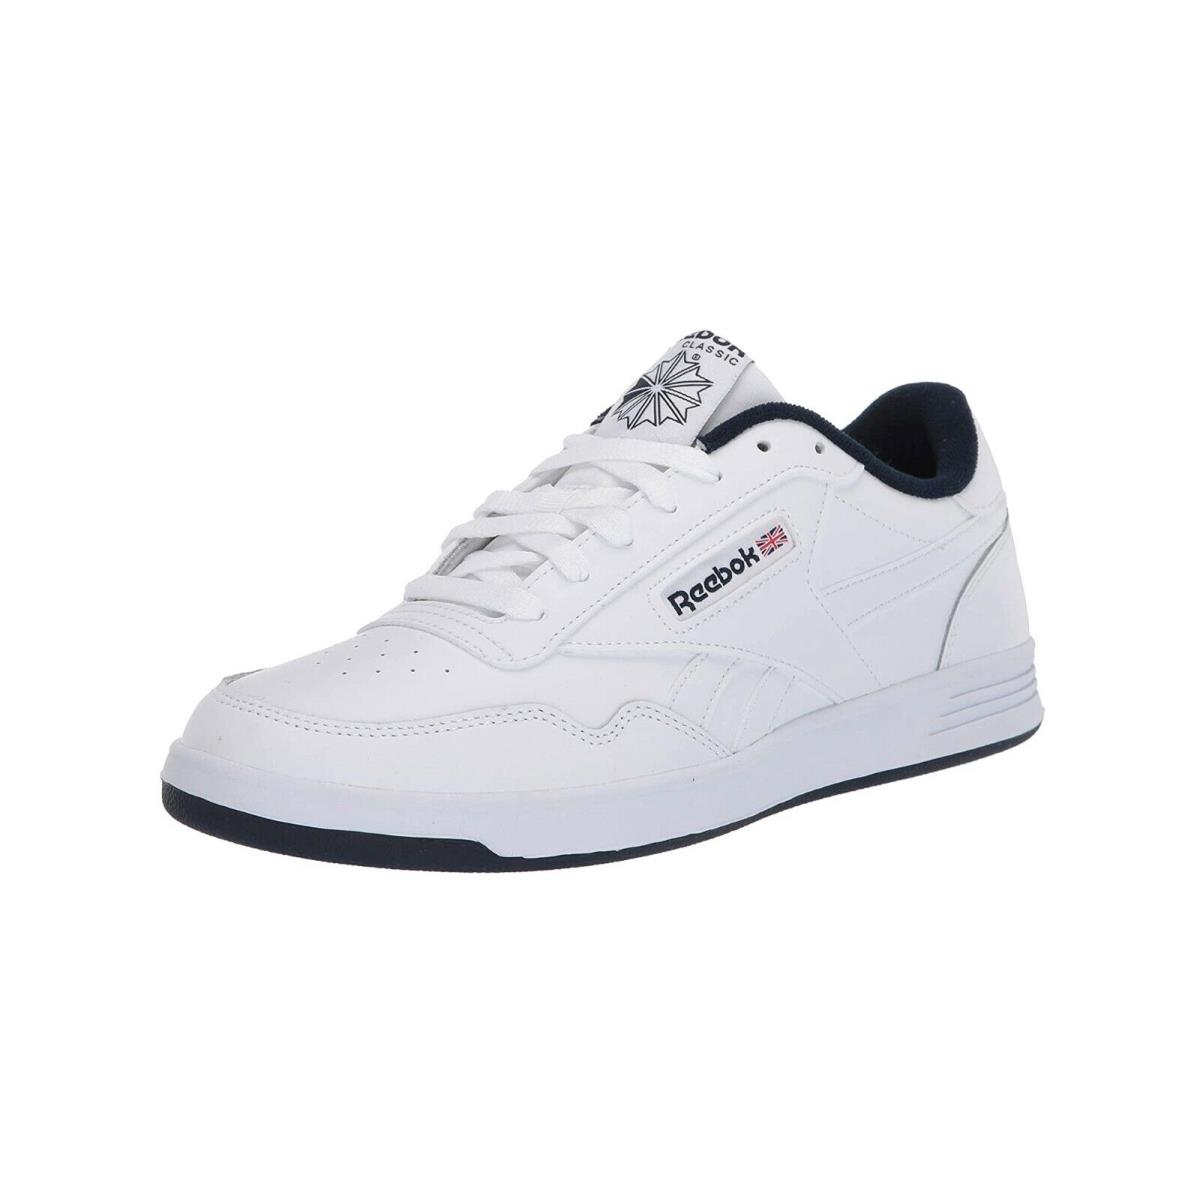 Reebok Club Memt White Navy Blue Memory Foam Men Tennis Shoes Faux Leather